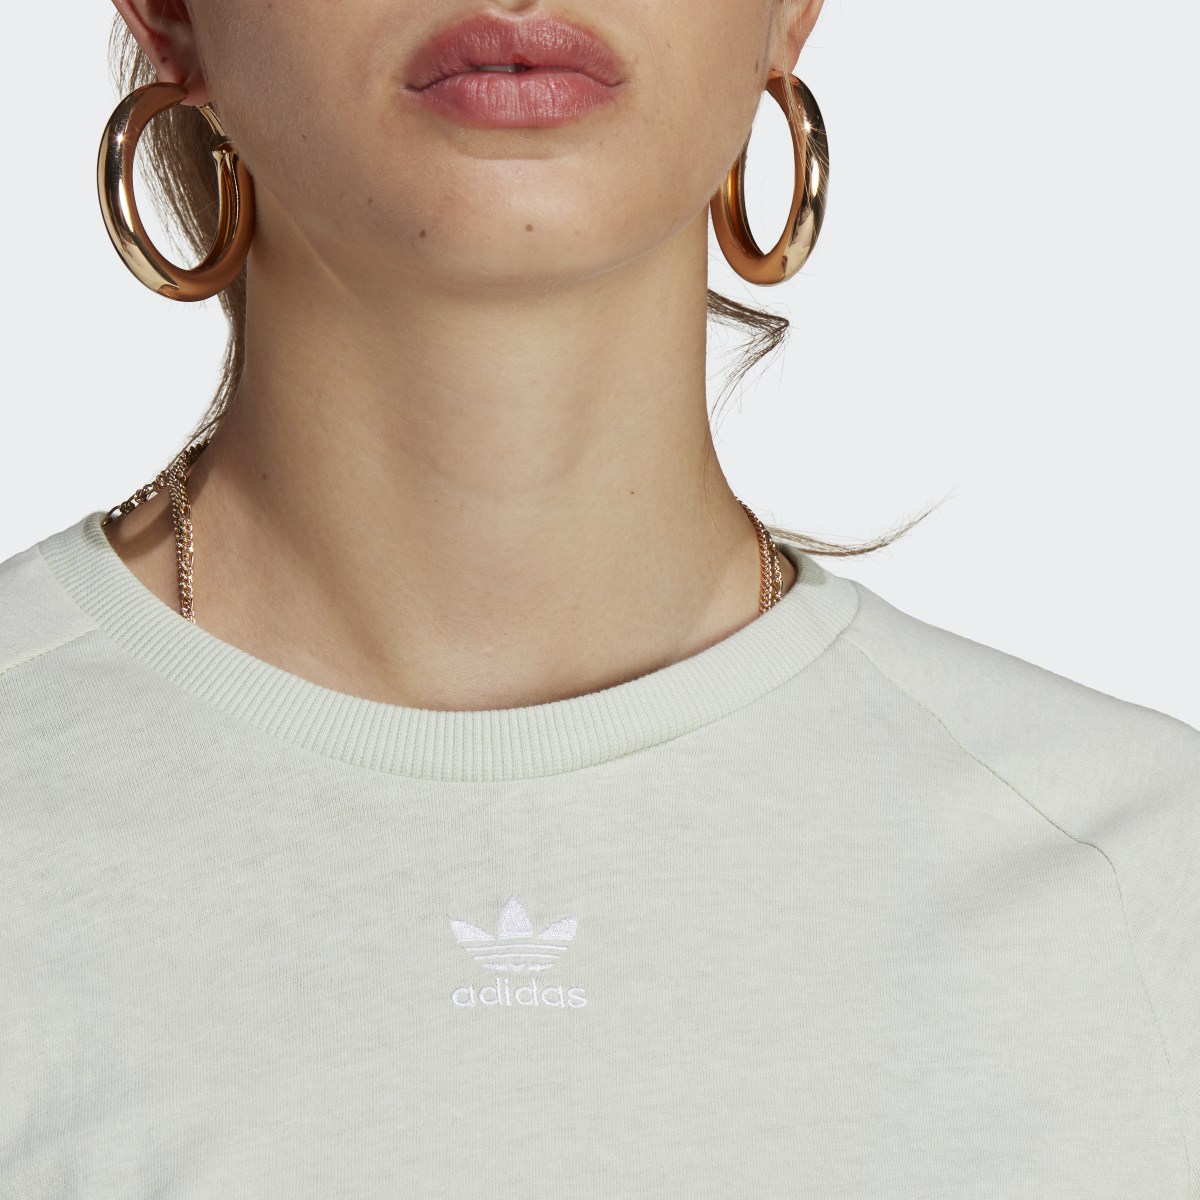 Adidas T-shirt Essentials+ Made with Hemp. 6